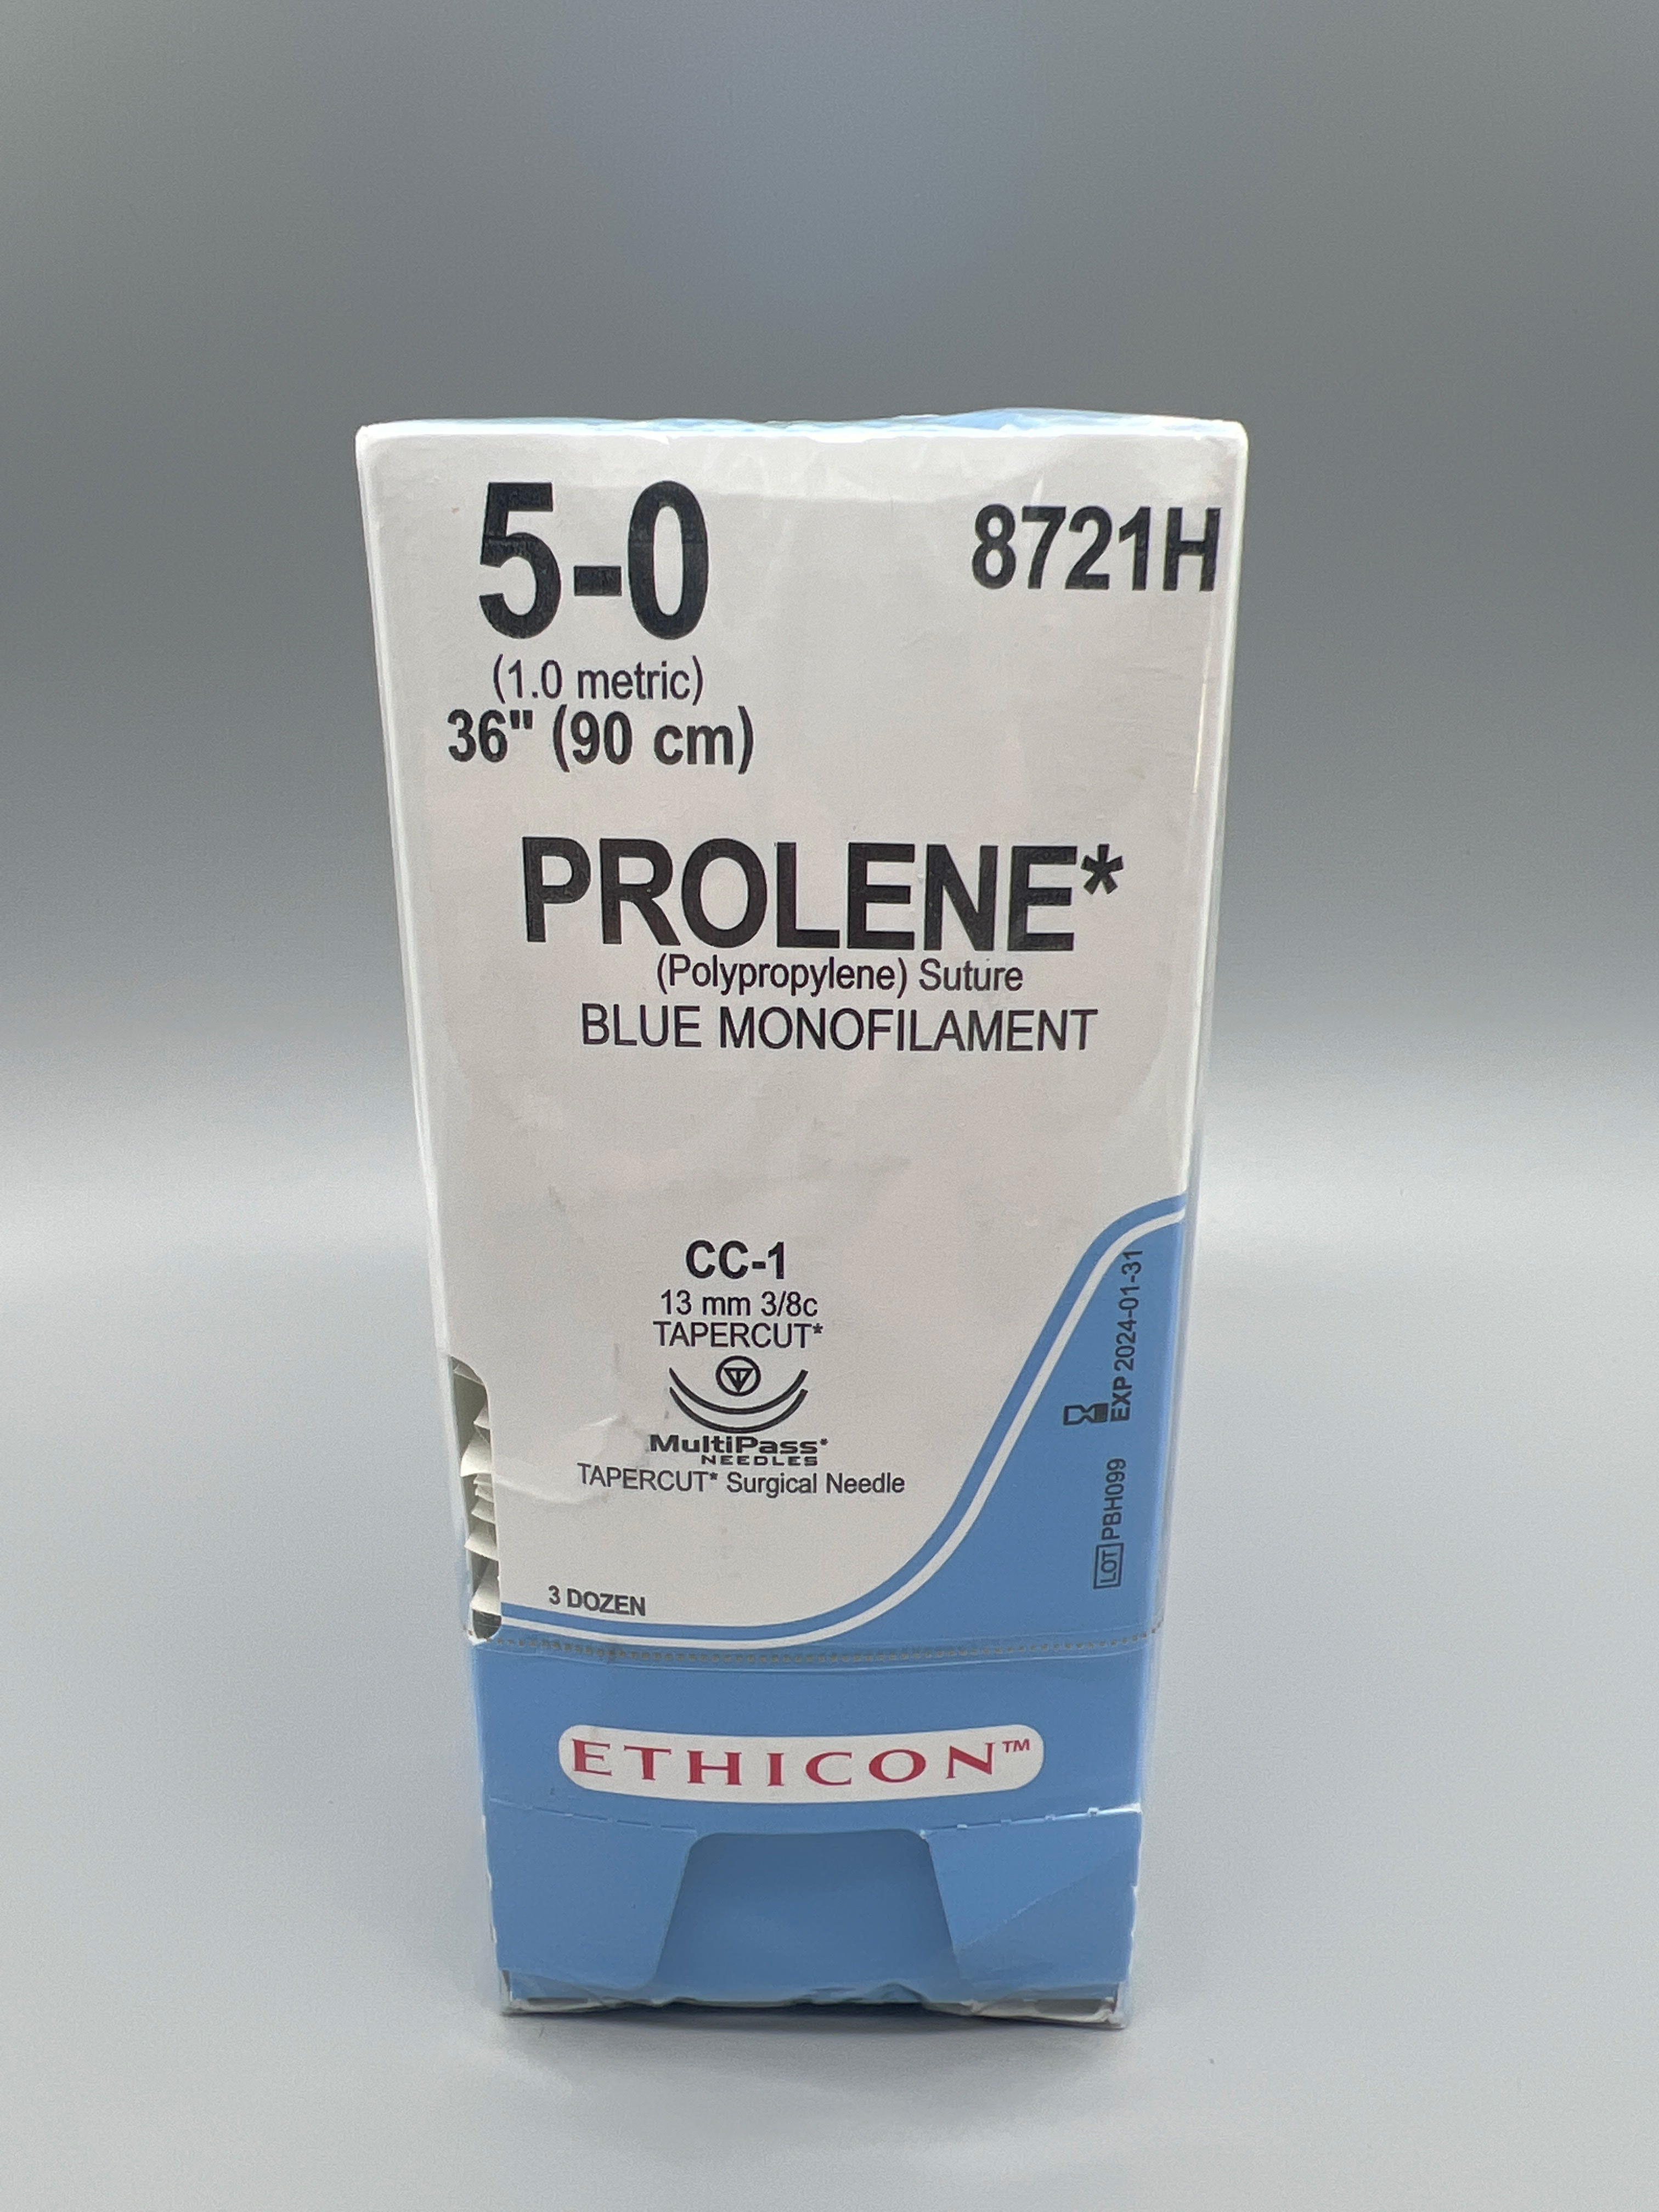 PROLENE POLYPROPYLENE SUTURE BLUE MONOFILAMENT CC-1 13MM 3/8C TAPERCUT MULTIPASS NEEDLE